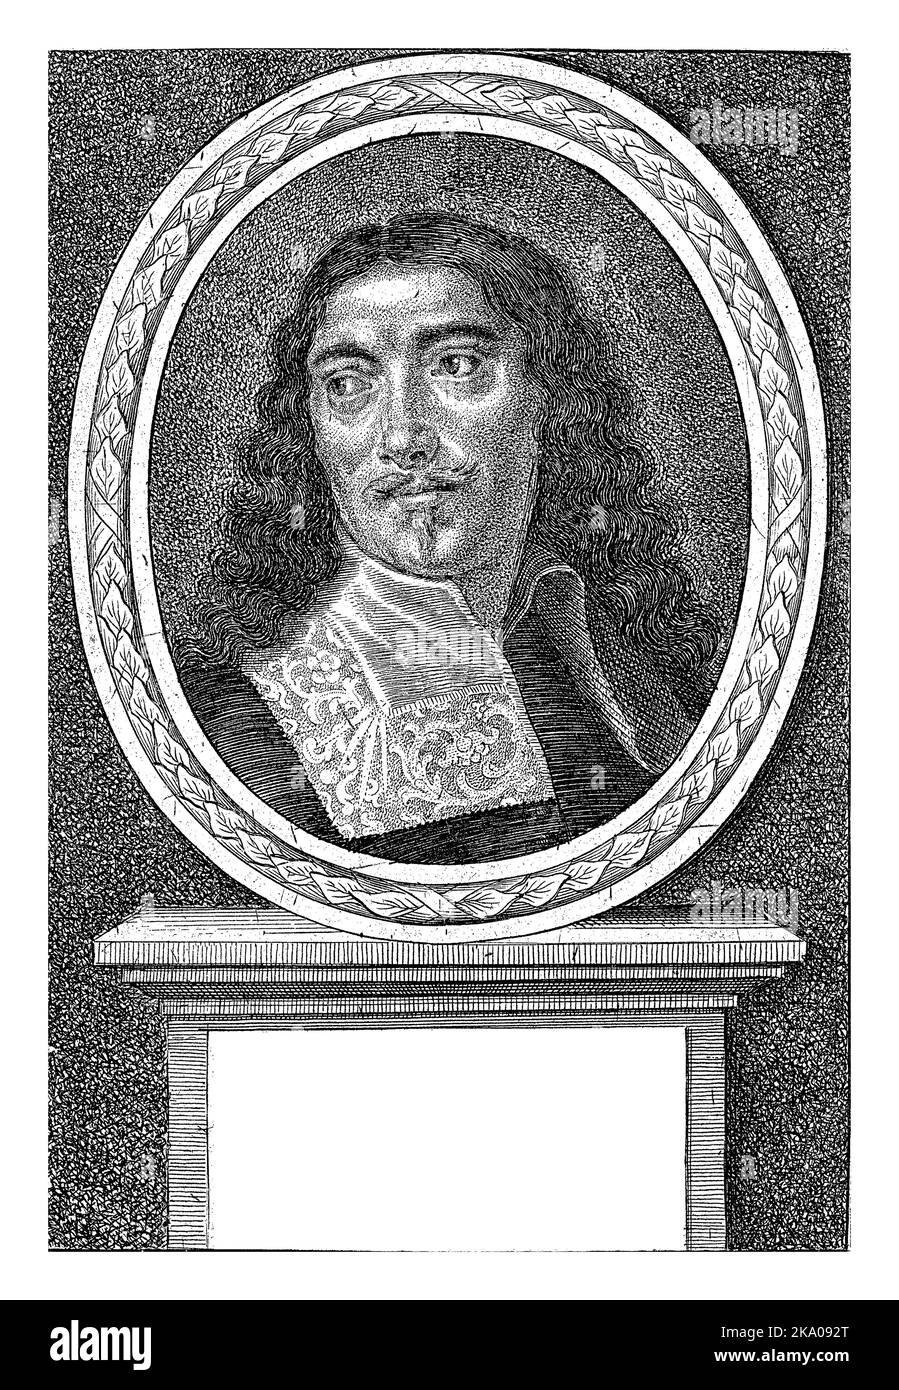 Portrait of Willem Ogier, Gaspar Bouttats, after Pieter Thijs, 1682 Portrait in an oval frame of Willem (Guilliame) Ogier, an Antwerp rhetorician, poe Stock Photo